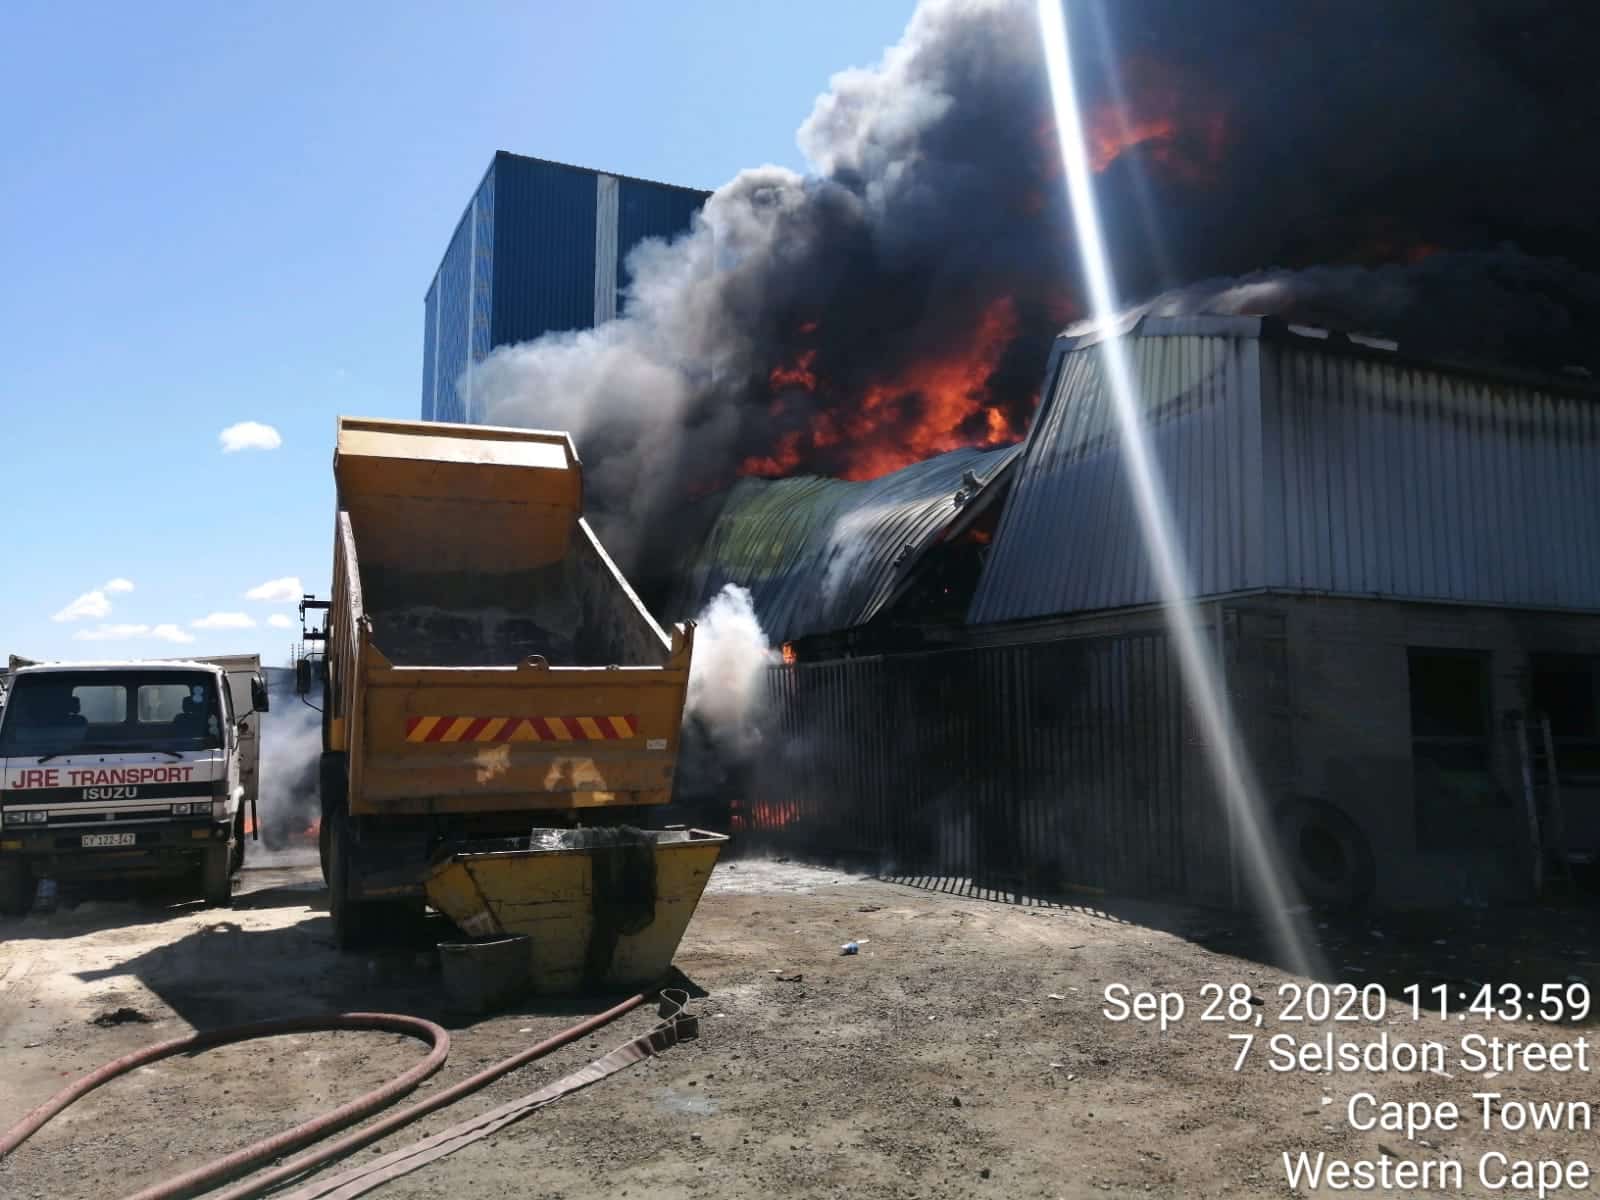 Watch: JRE Transport factory burns down destroying trucks injuring one 20200929 193009